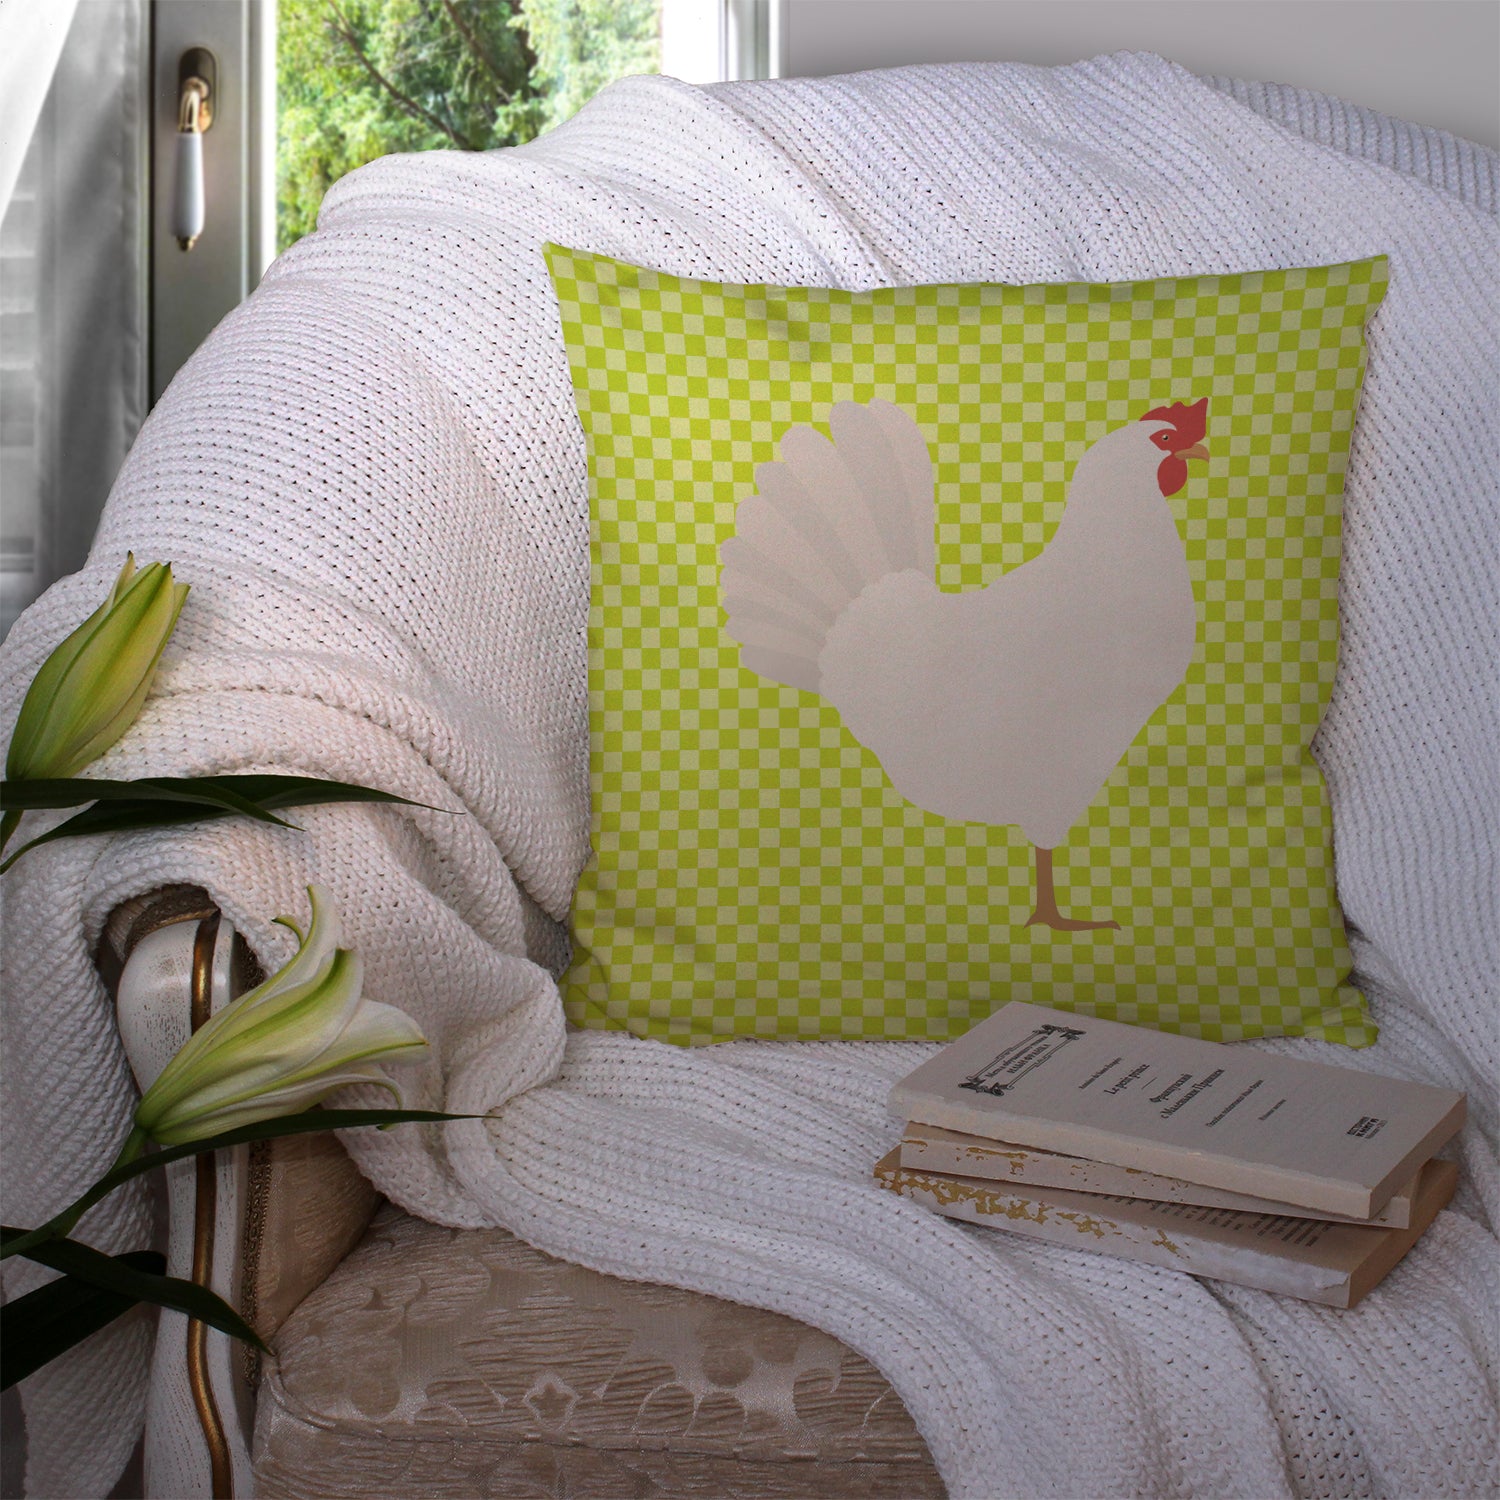 Leghorn Chicken Green Fabric Decorative Pillow BB7666PW1414 - the-store.com